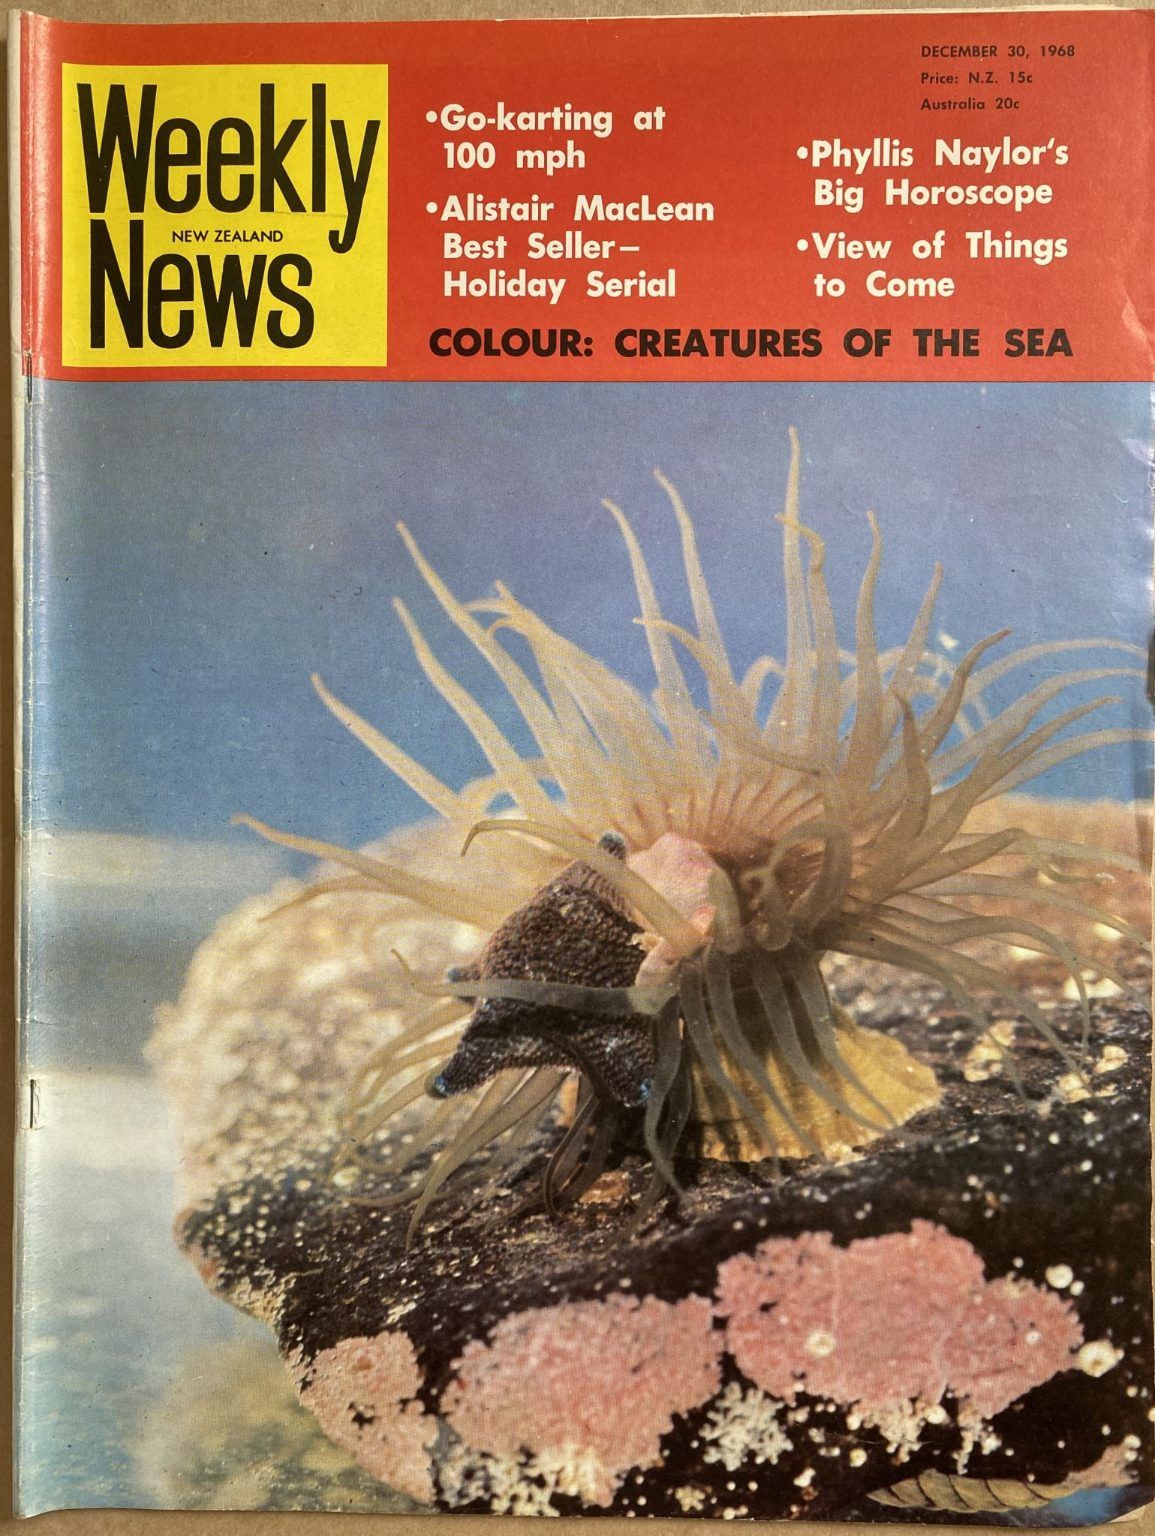 OLD NEWSPAPER: New Zealand Weekly News, 30 December 1968